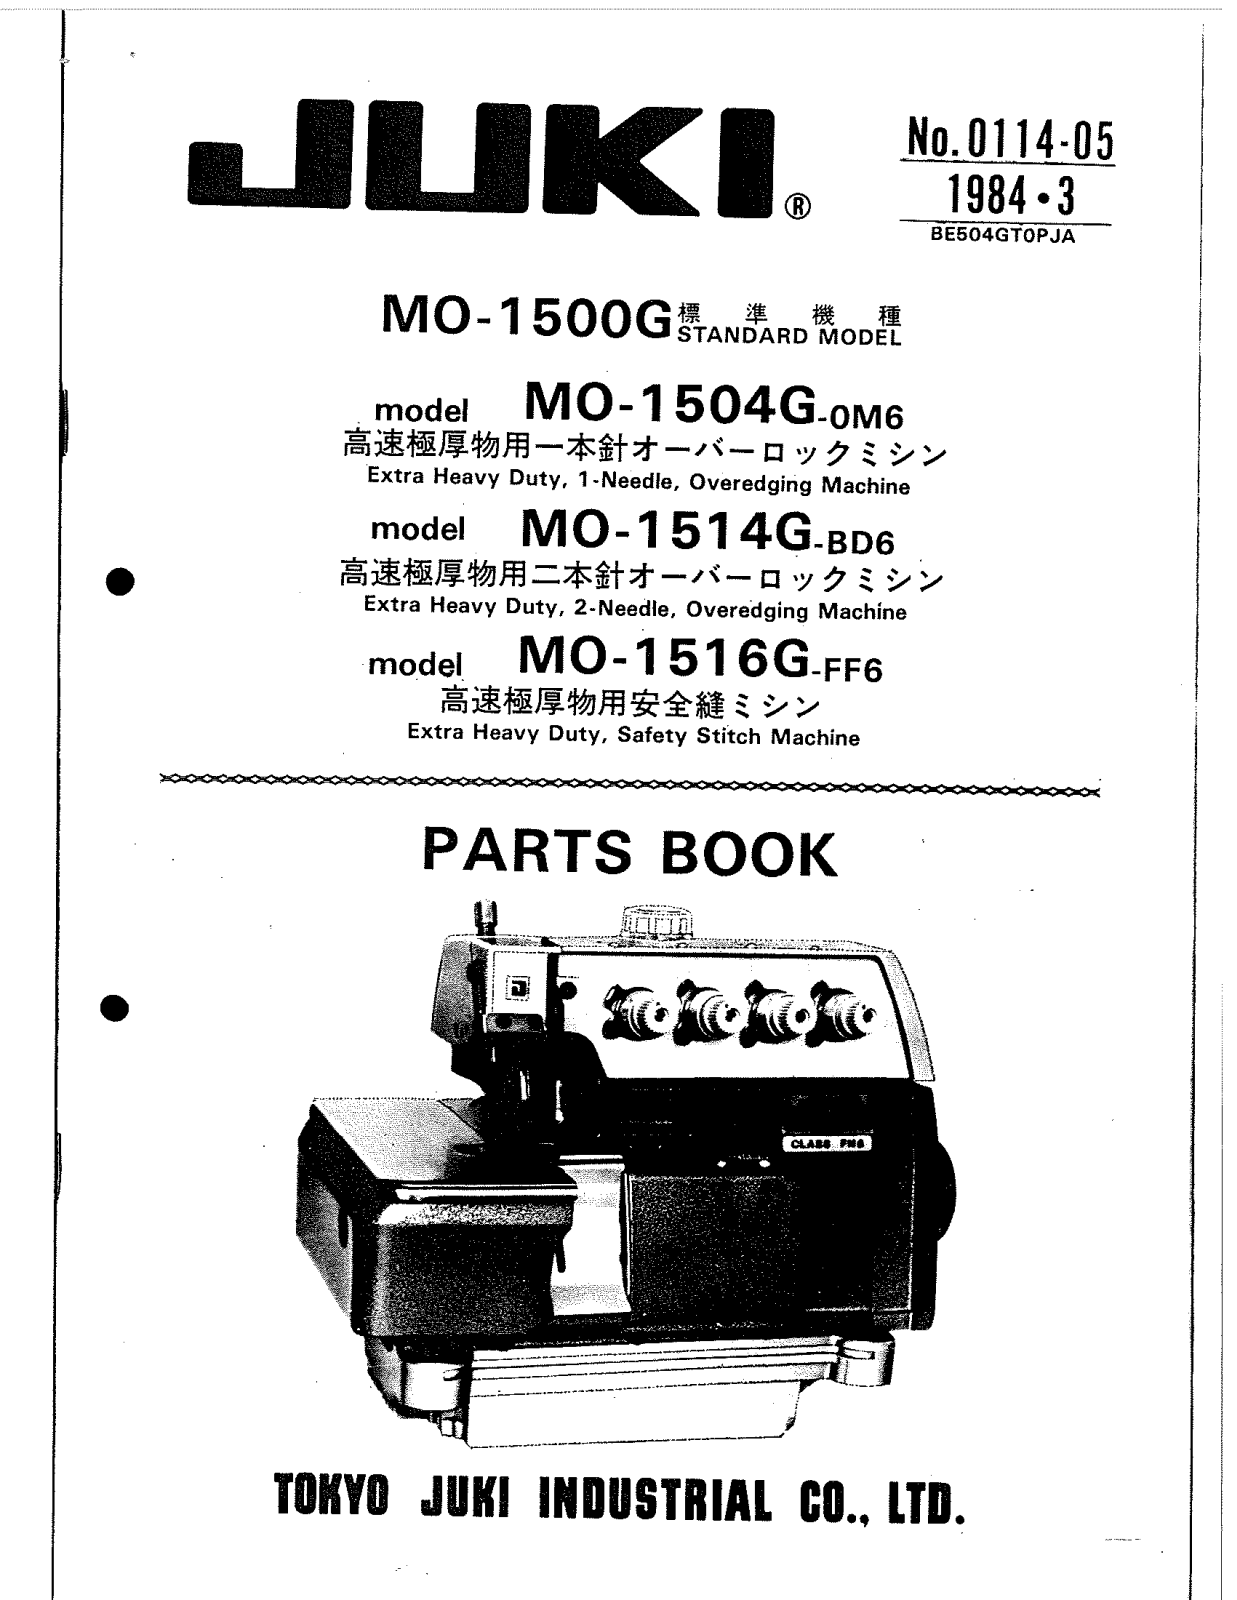 Juki MO-1504G-0M6, MO-1514G-BD6, MO-1516G-FF6 Parts List